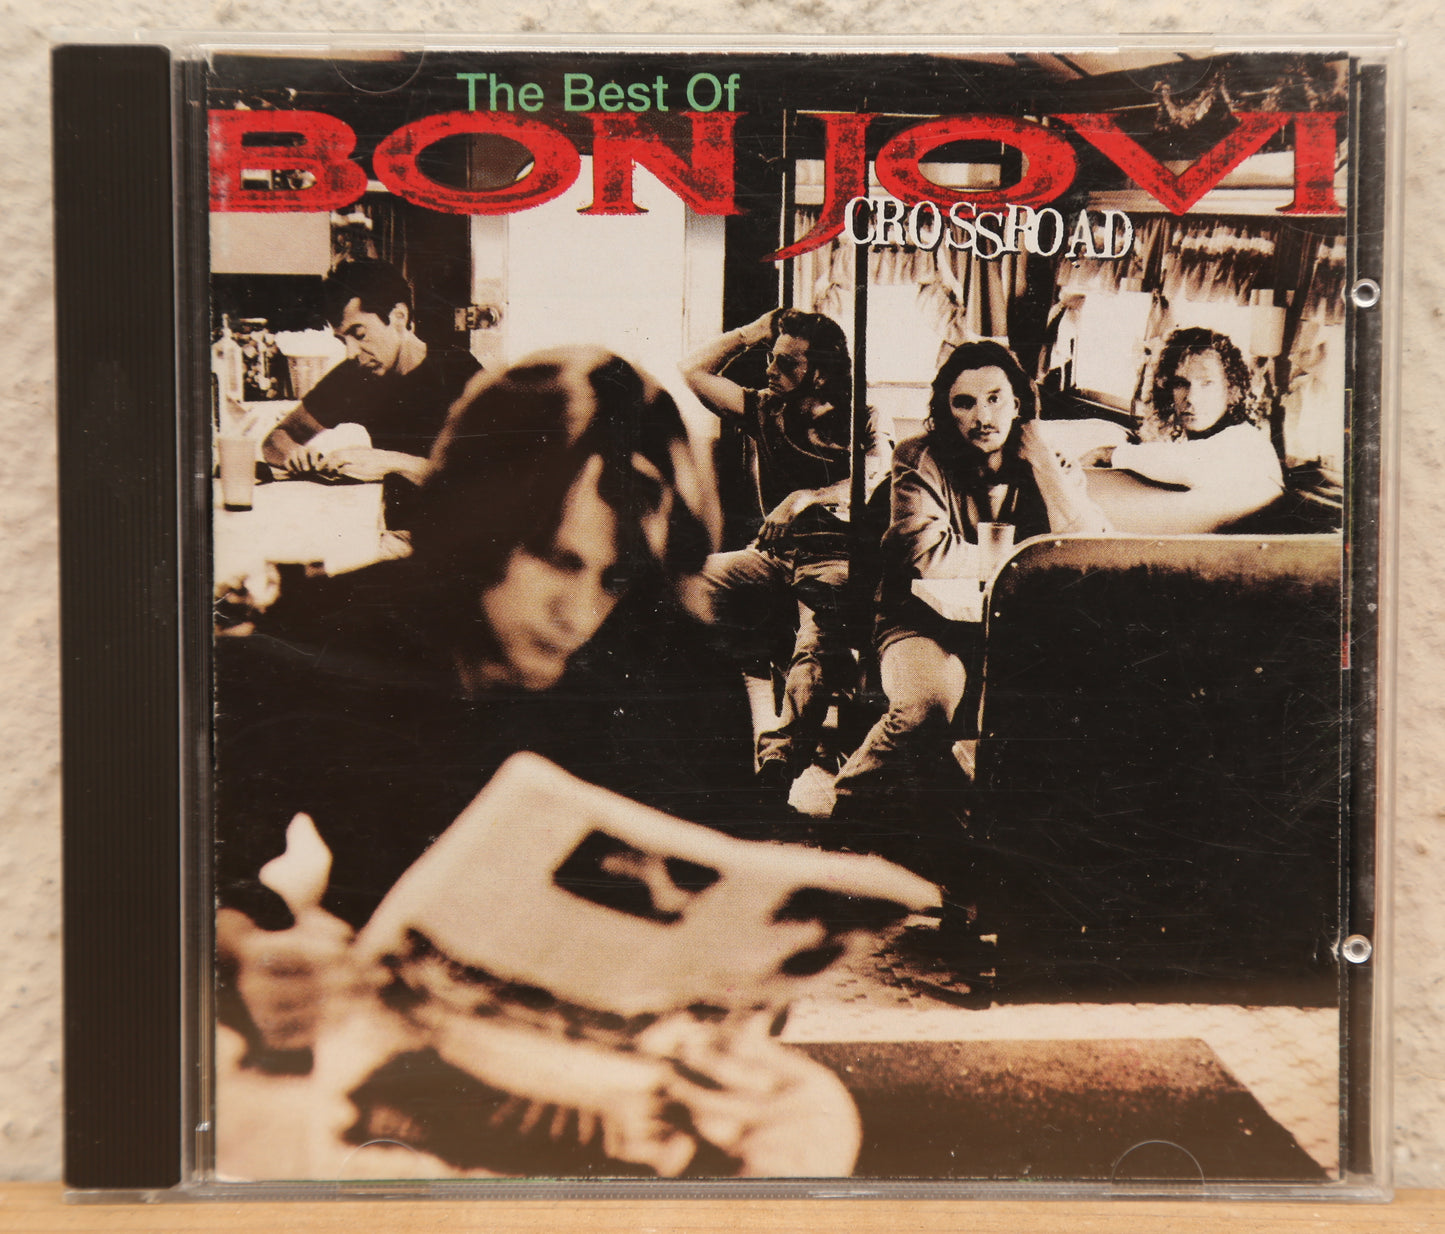 Bon Jovi - The best of (Crossroad) cd